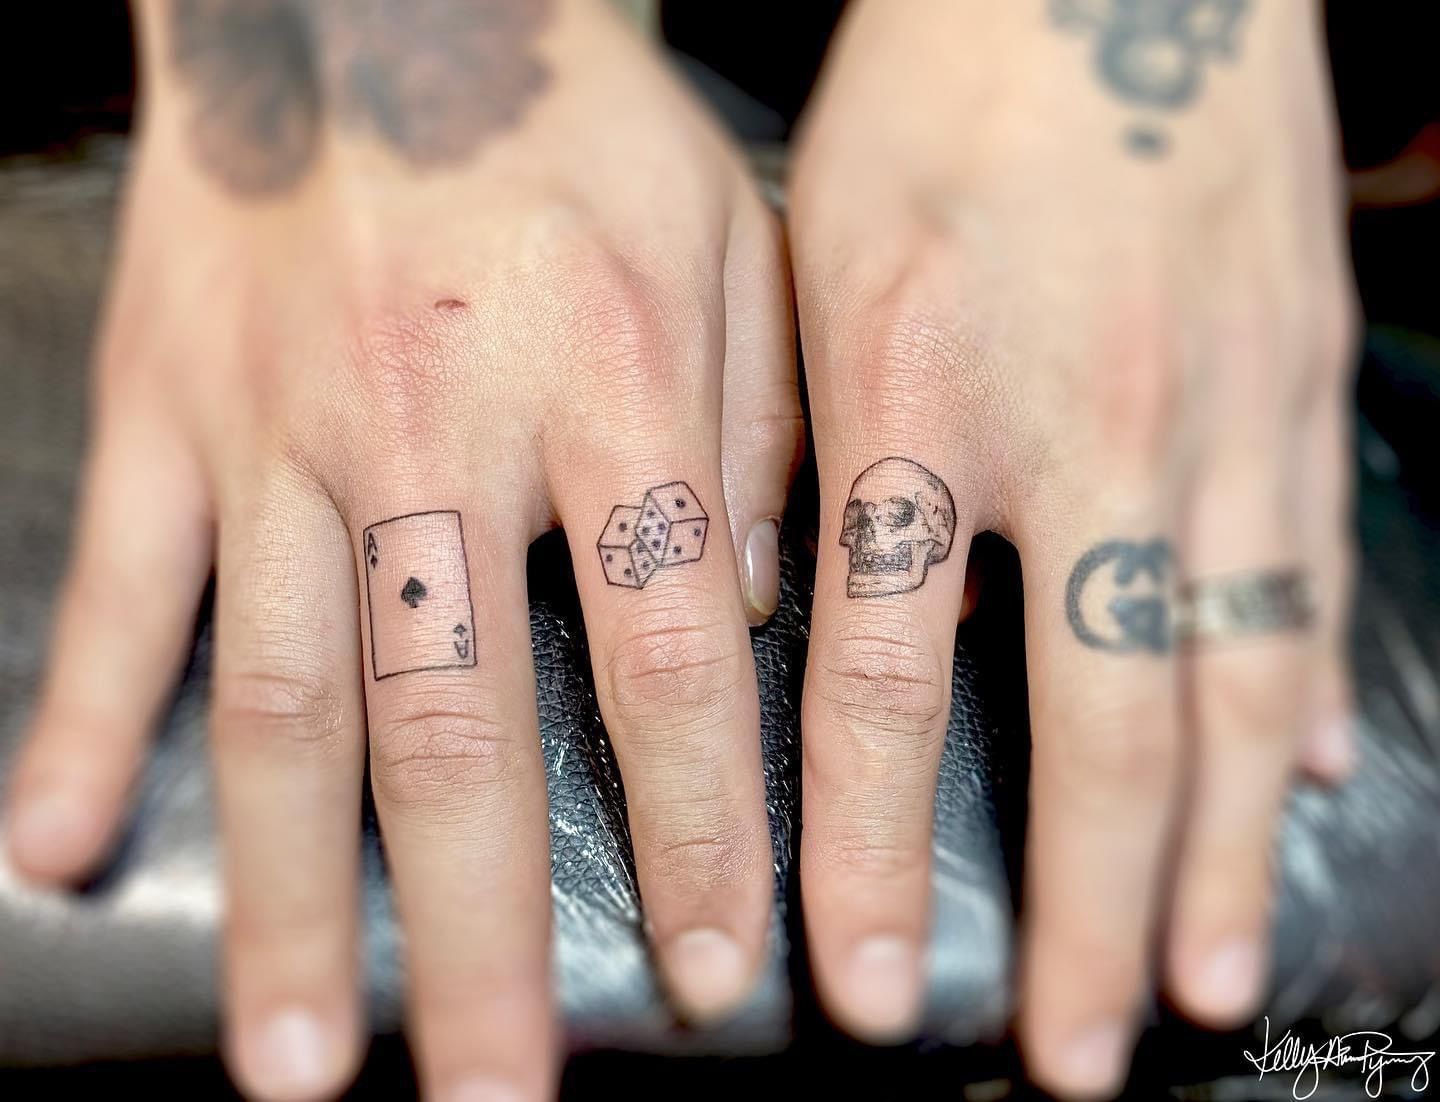 20+ Thumb tattoo designs | Thumb finger tattoo | Stylish thumb tattoos -  Lets style buddy - YouTube